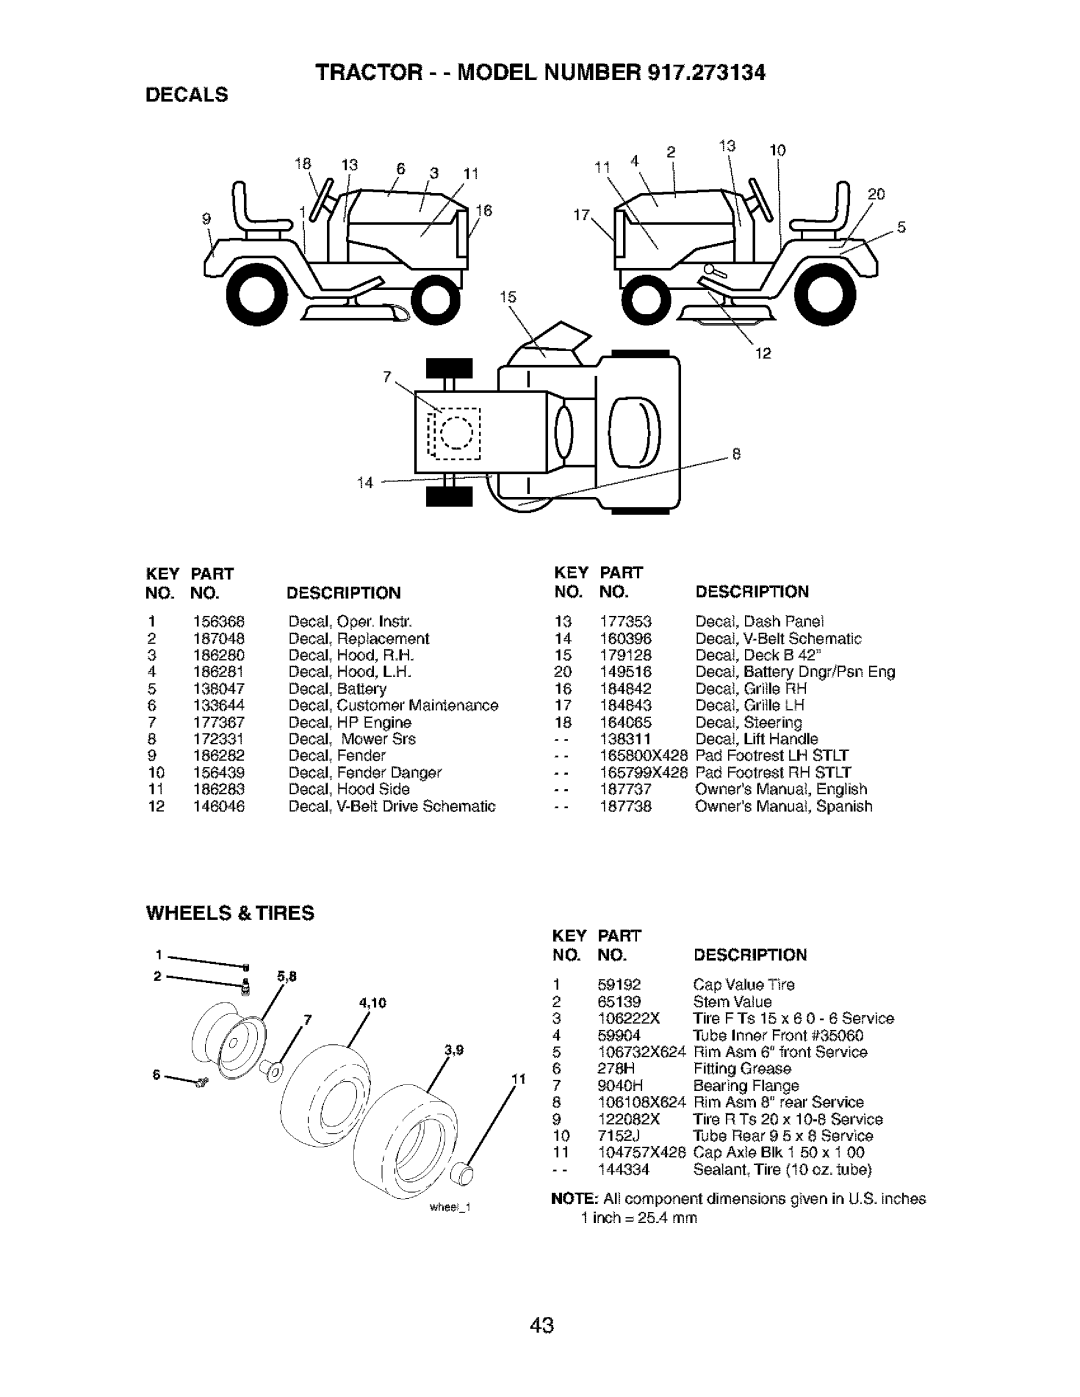 Craftsman 917.273134 owner manual TRACTOR - - MODEL NUMBER 917,273134 DECALS, Wheels & Tires 